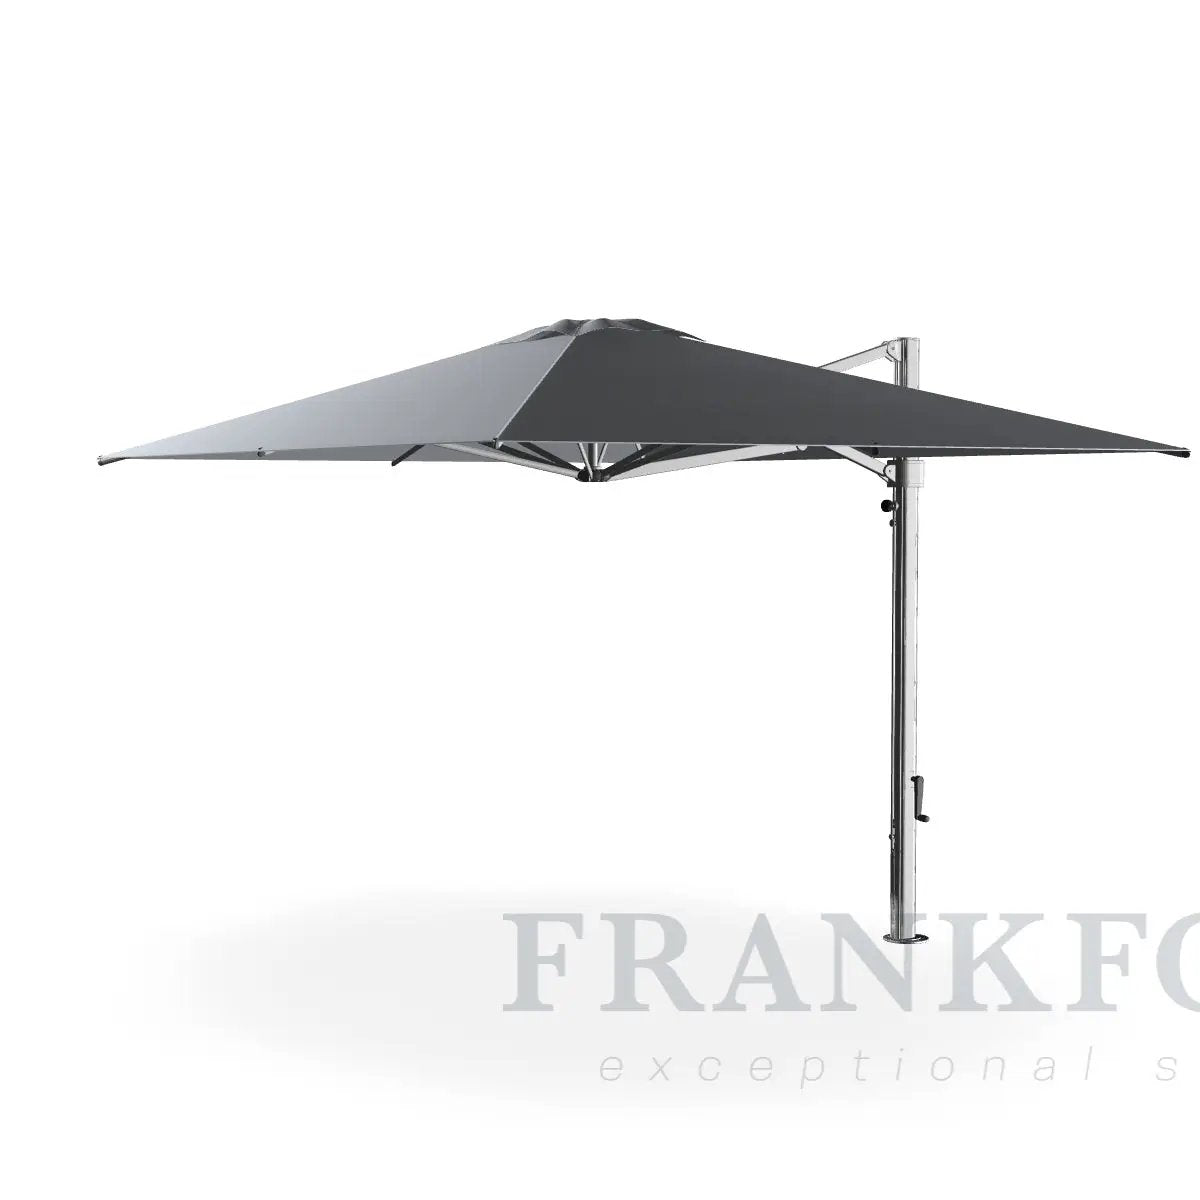 10 X 13F Rectangle Eclipse Premium Cantilever Umbrella by Frankford